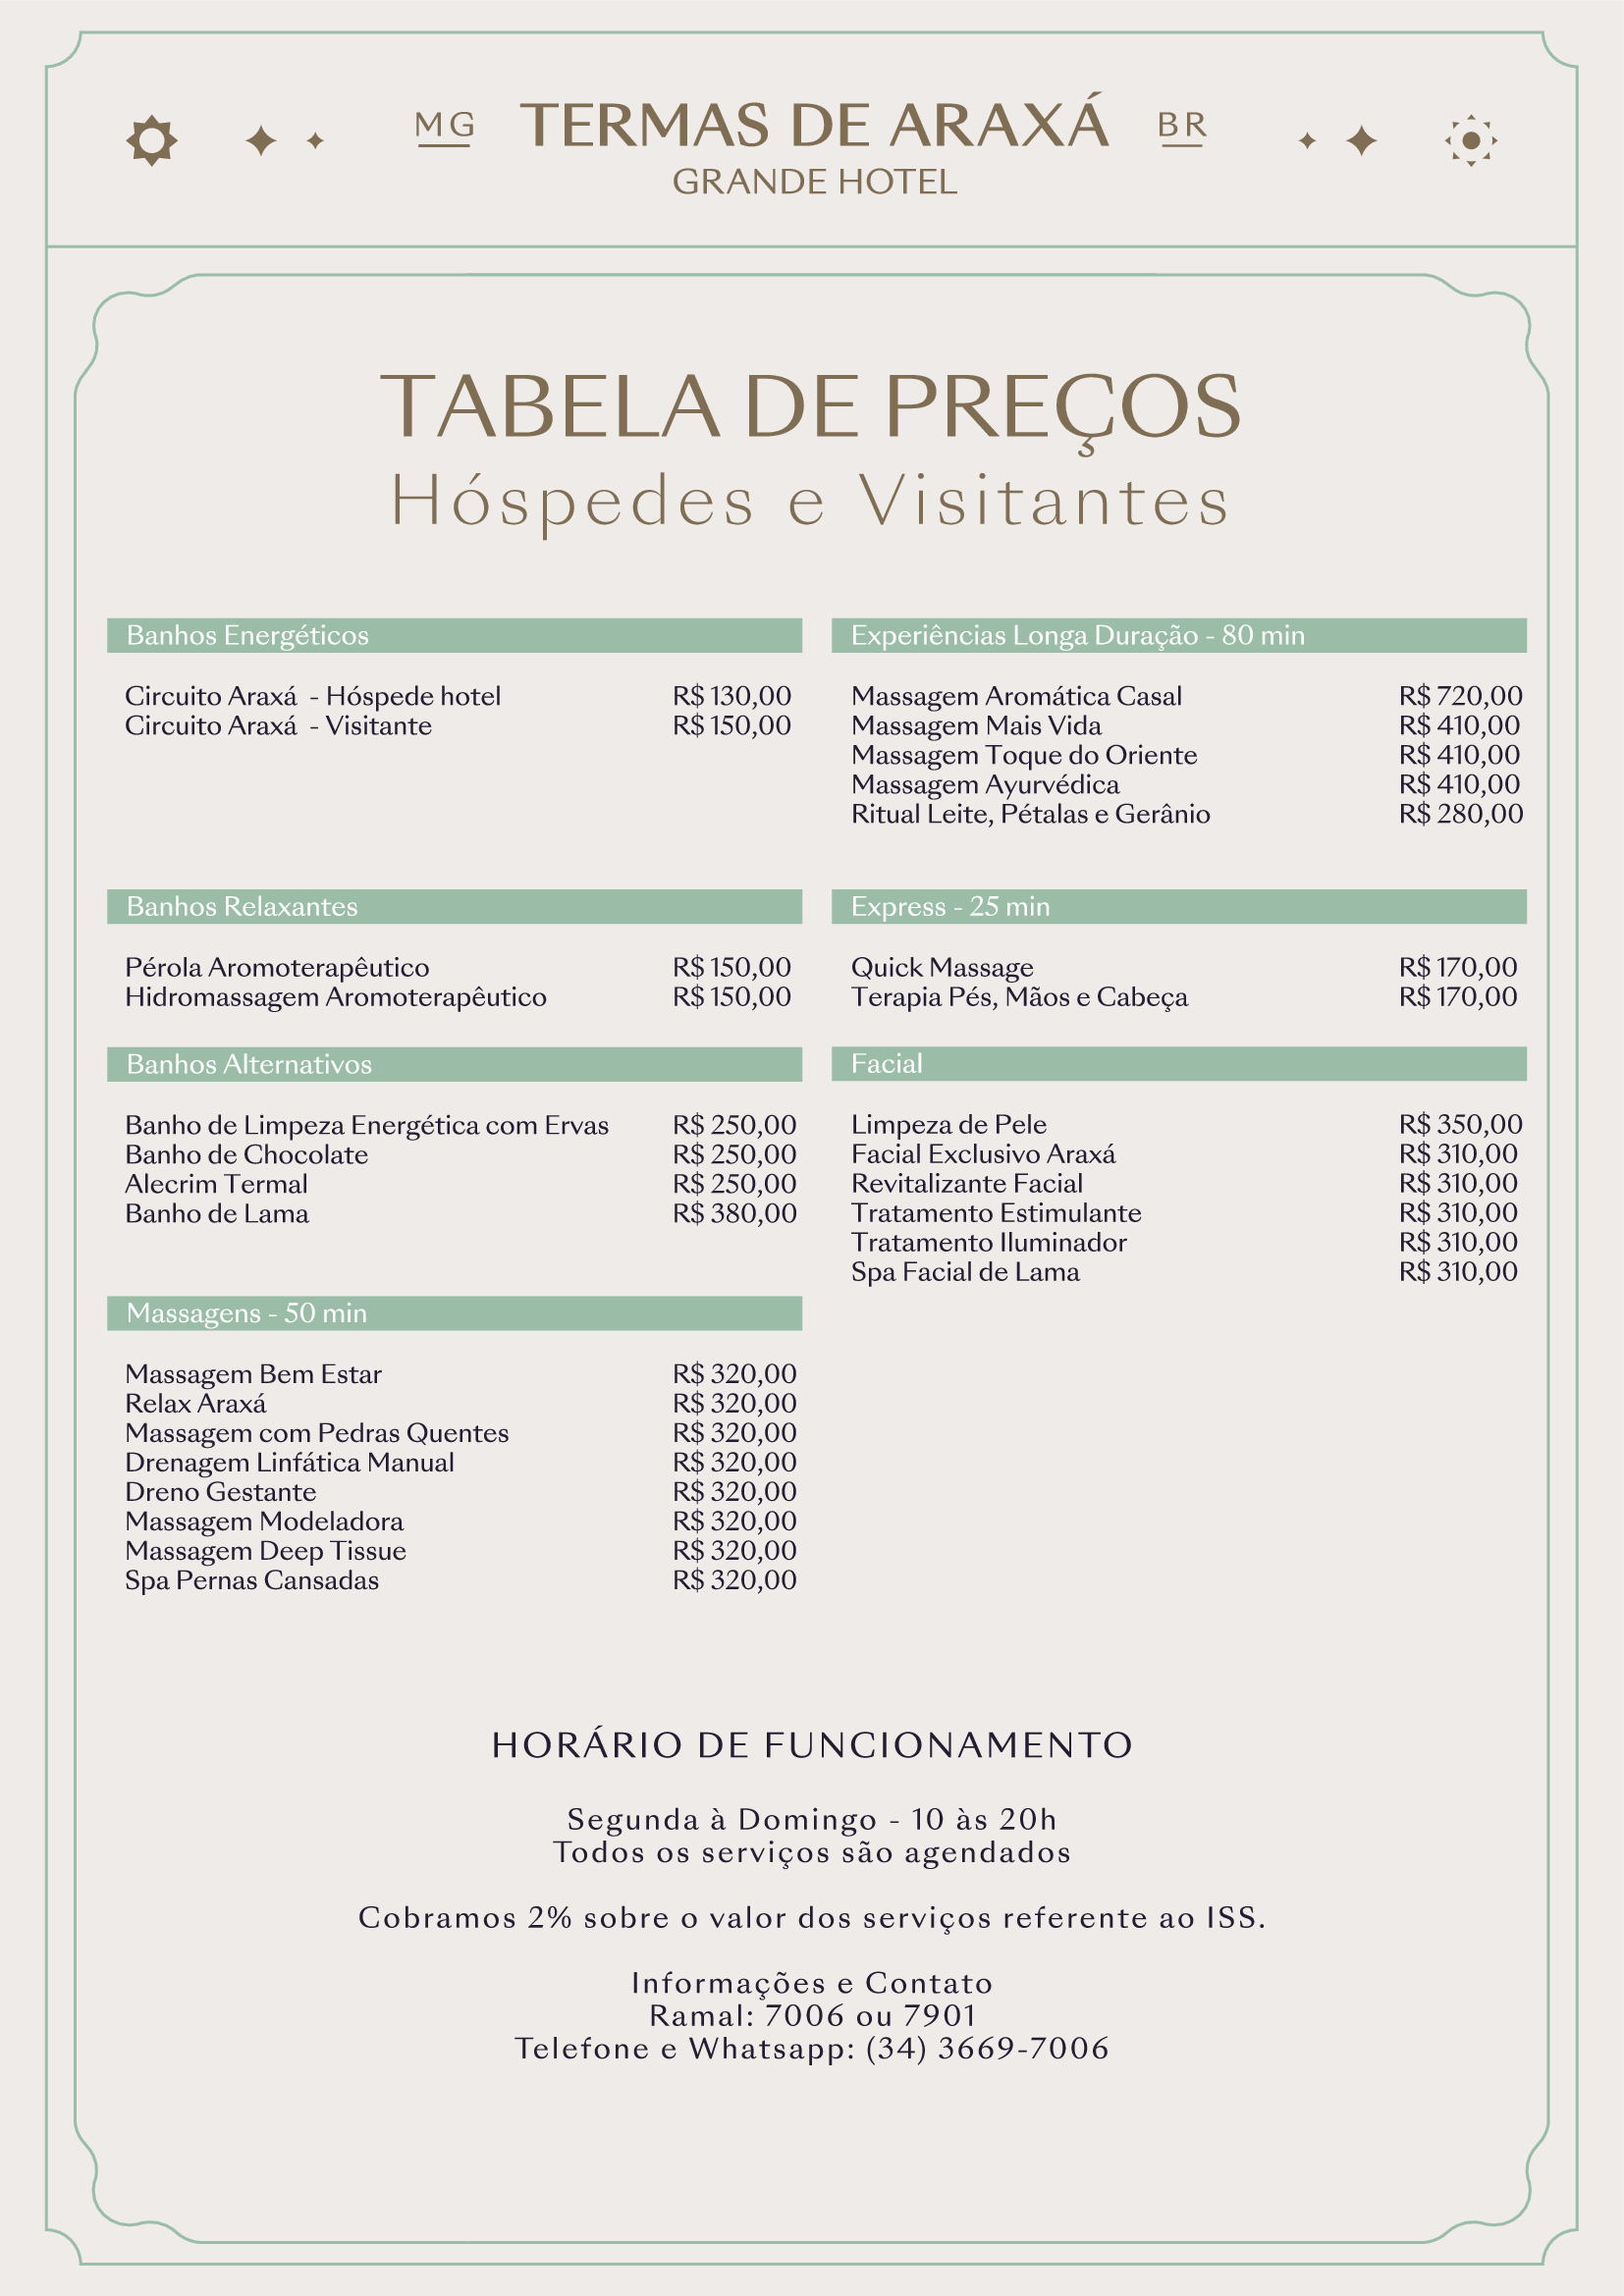 Tabela de Preços Termas, Grande Hotel Termas de Araxá, Minas Gerais, Brasil